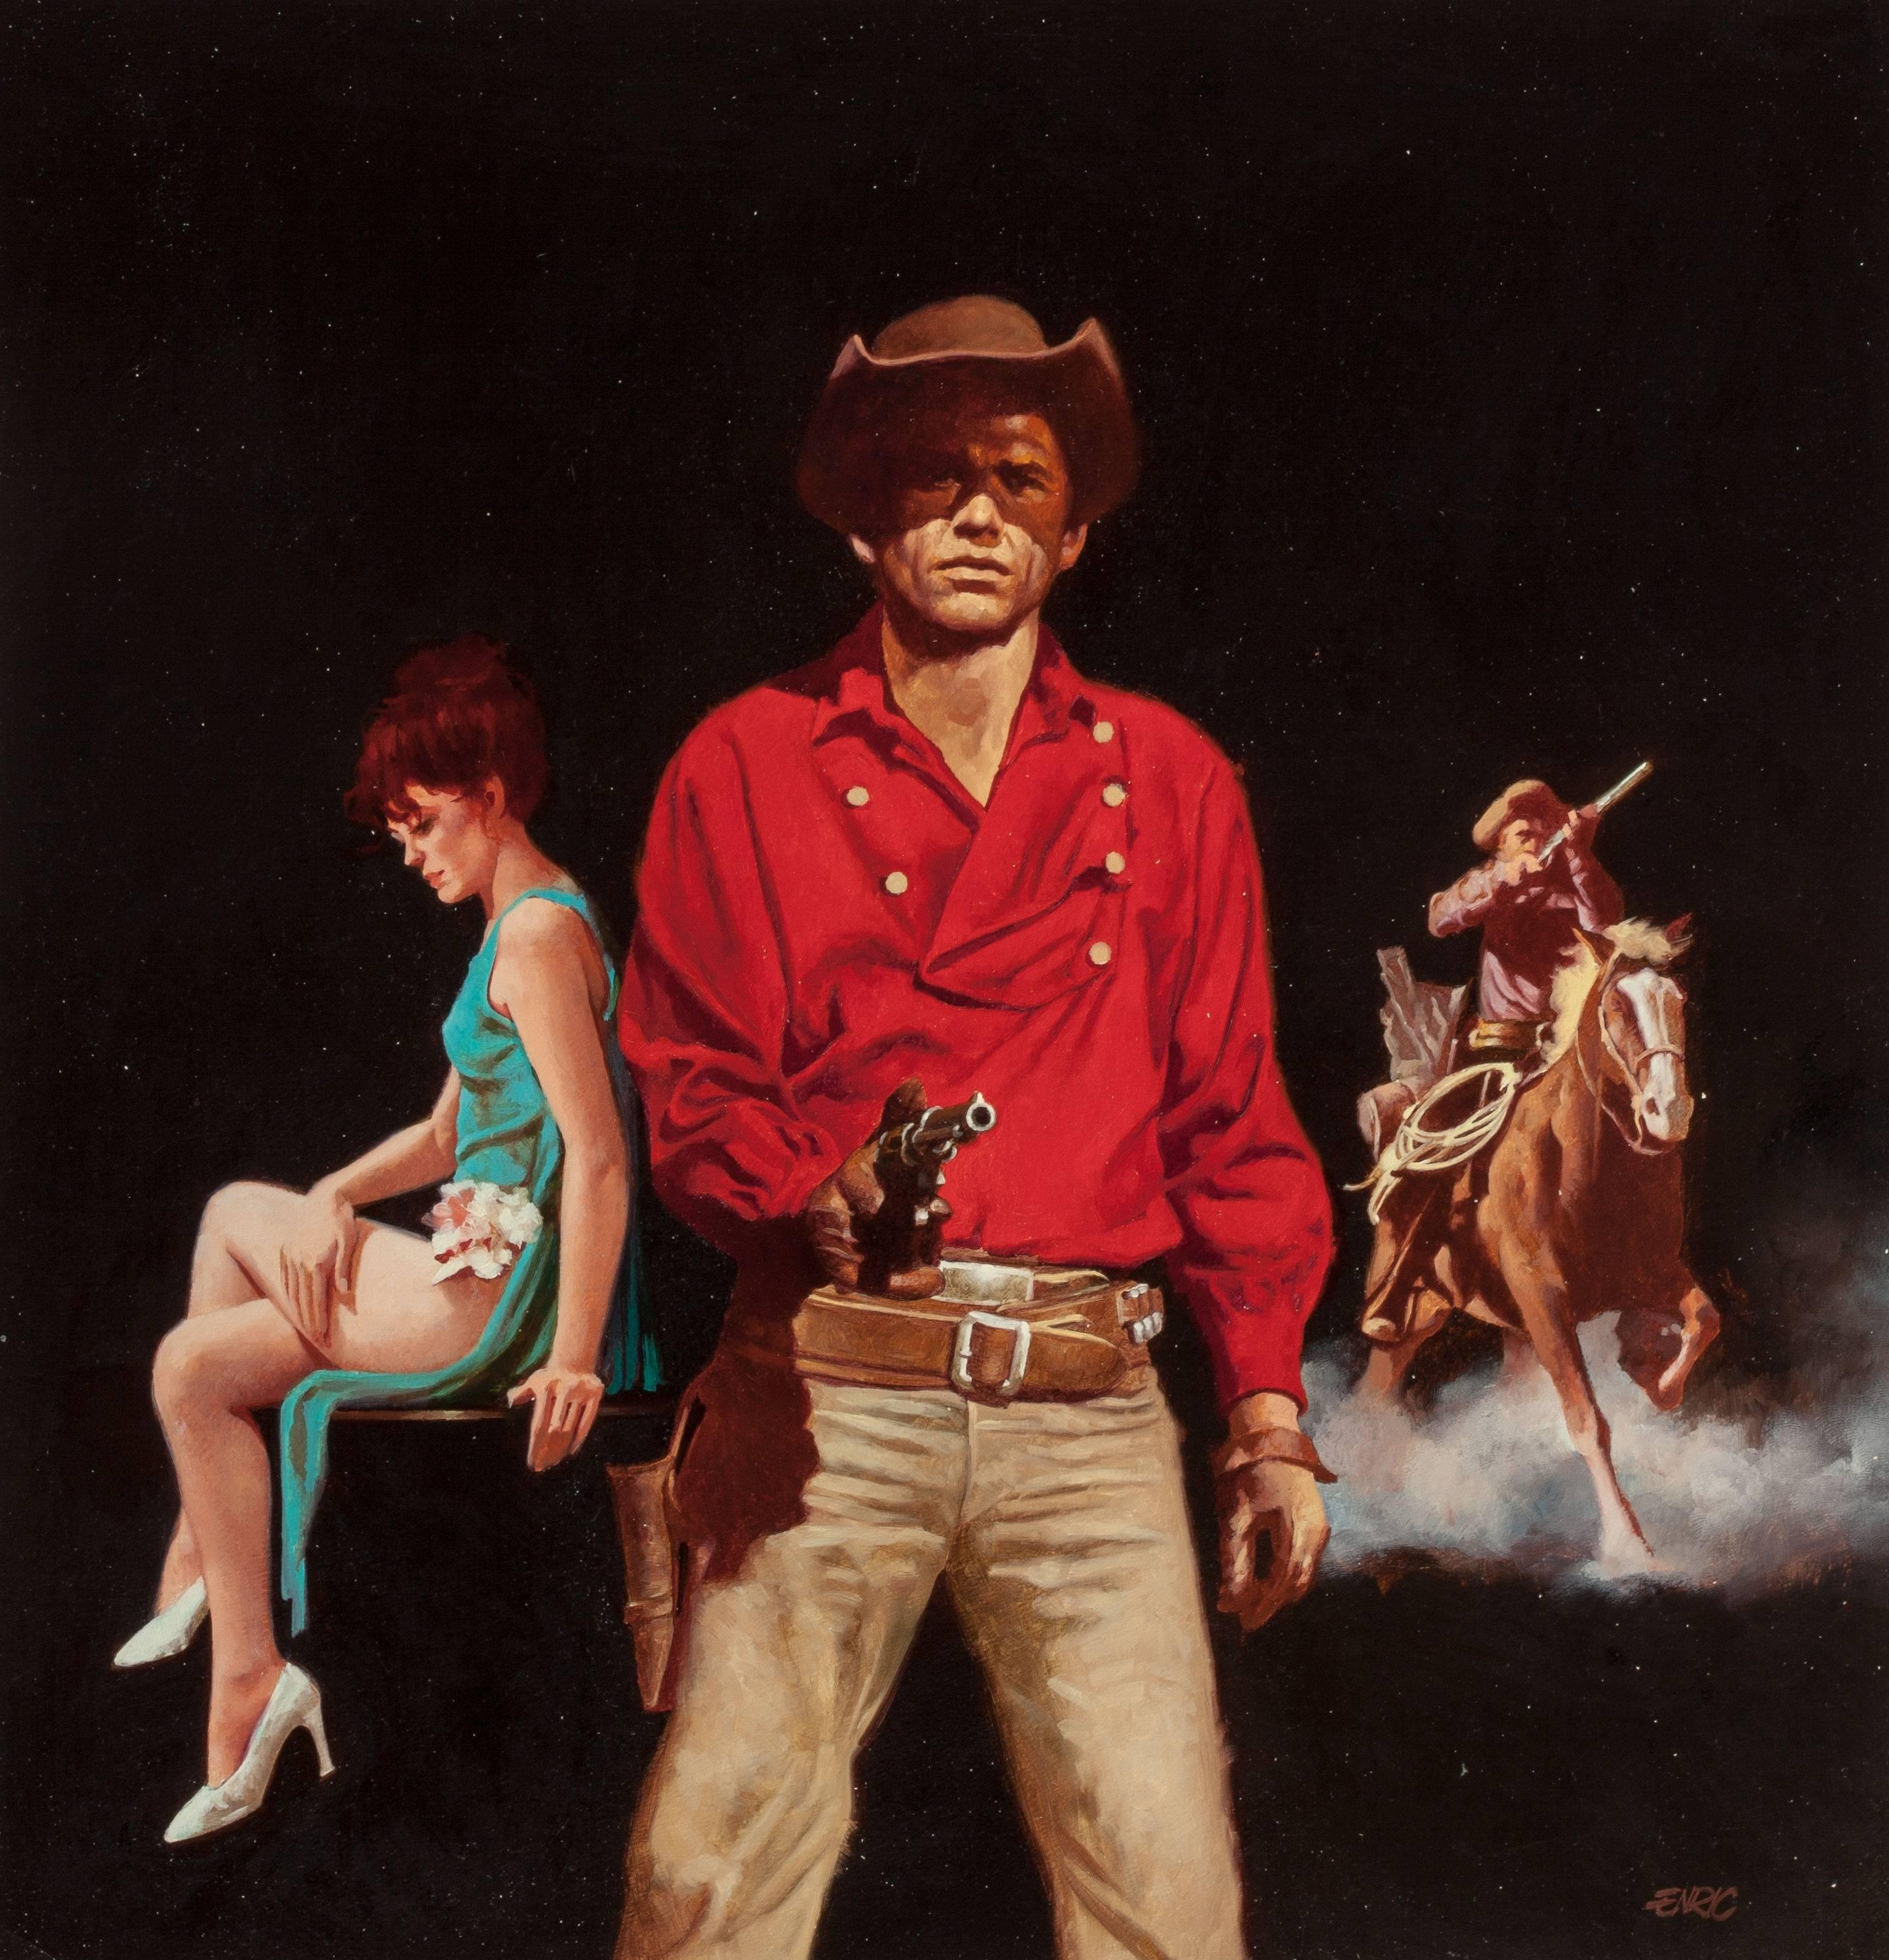 Enrich Torres Portrait Painting - Cowboy Love Story, Paperback Cover